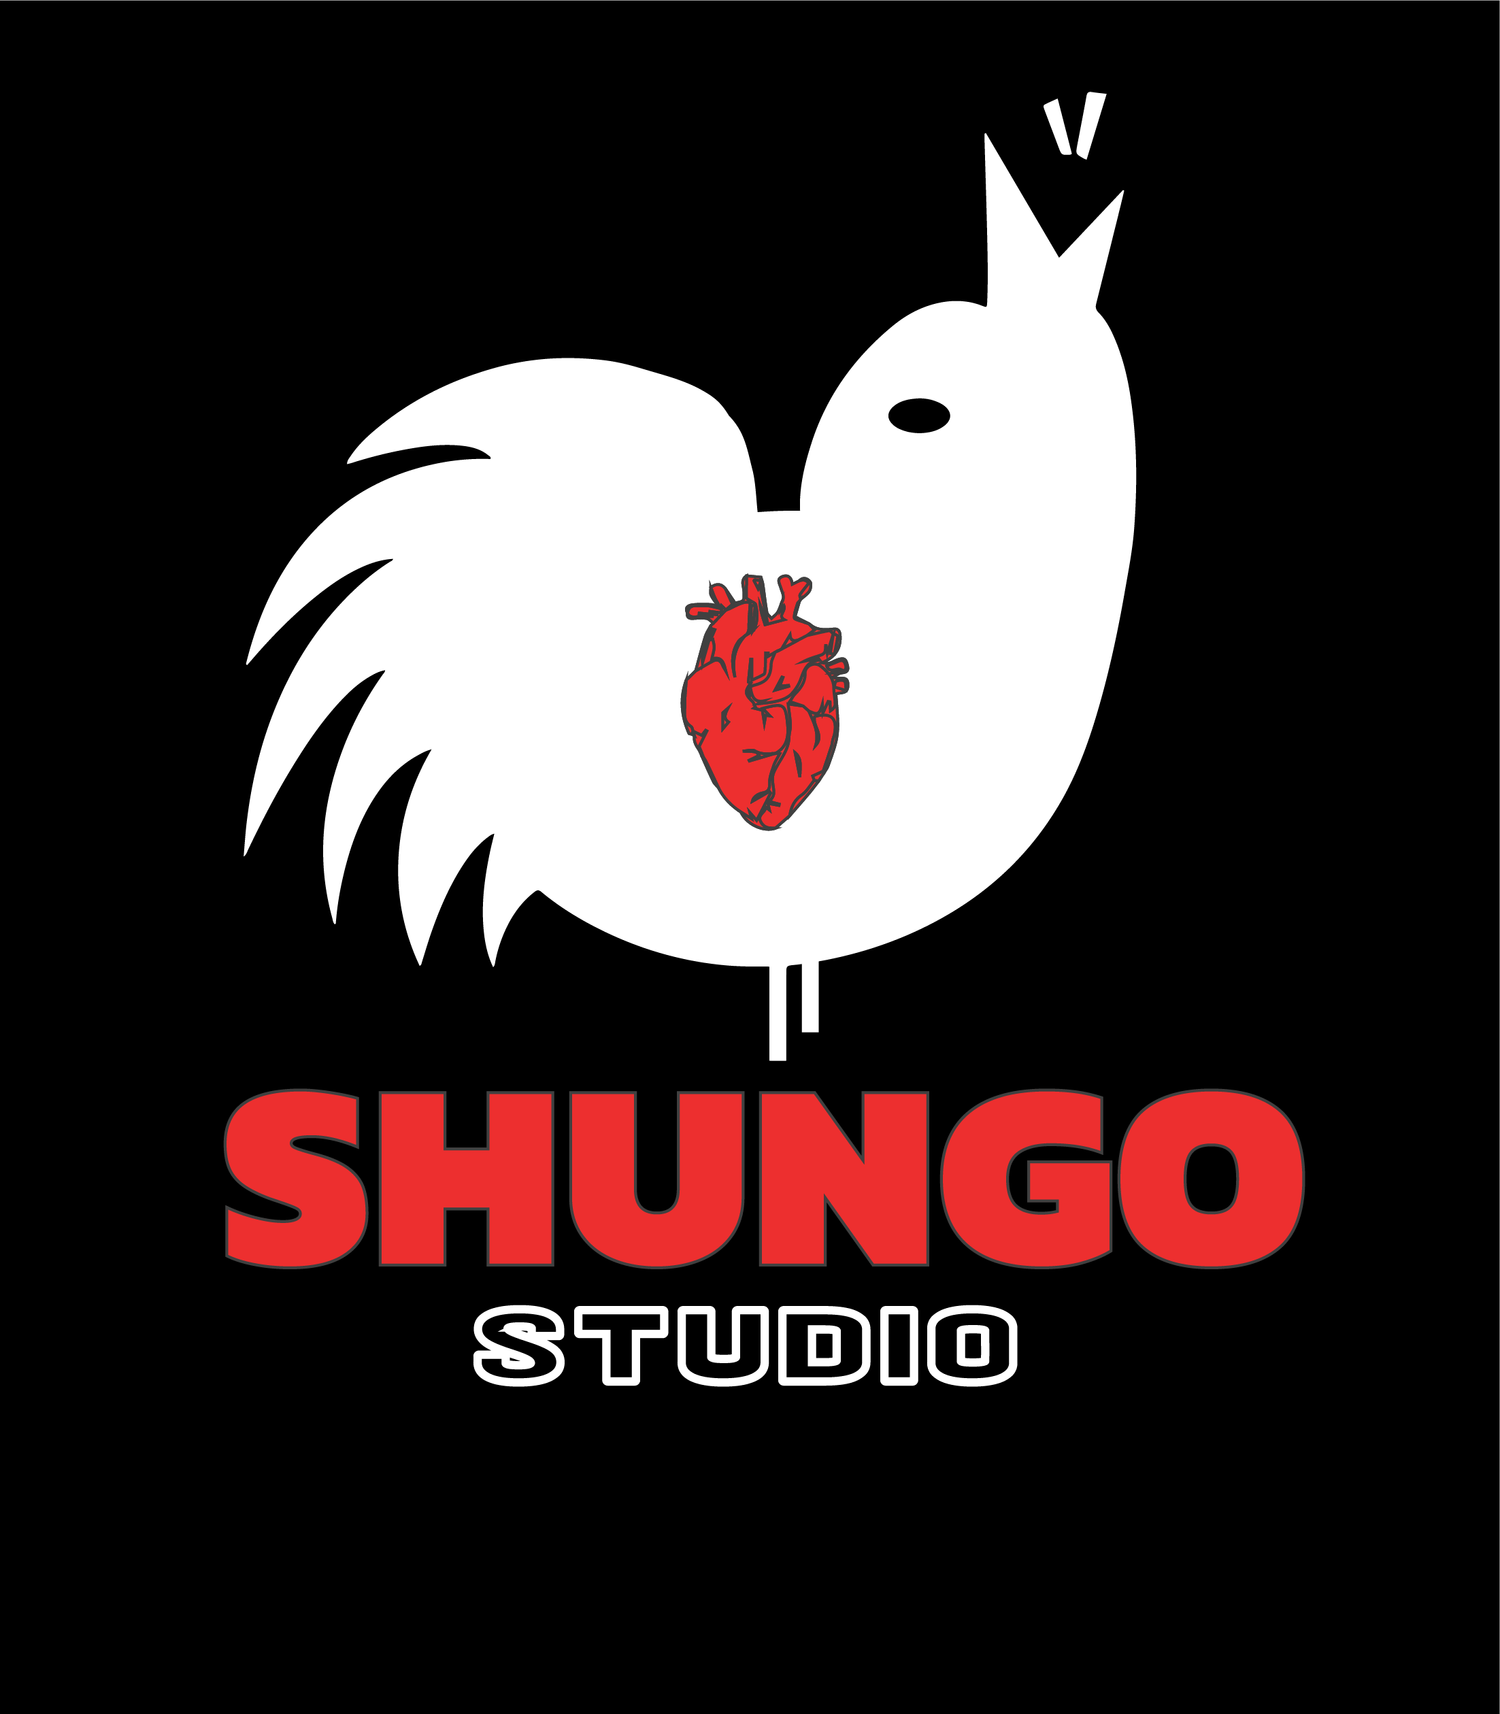 Shungo Studio